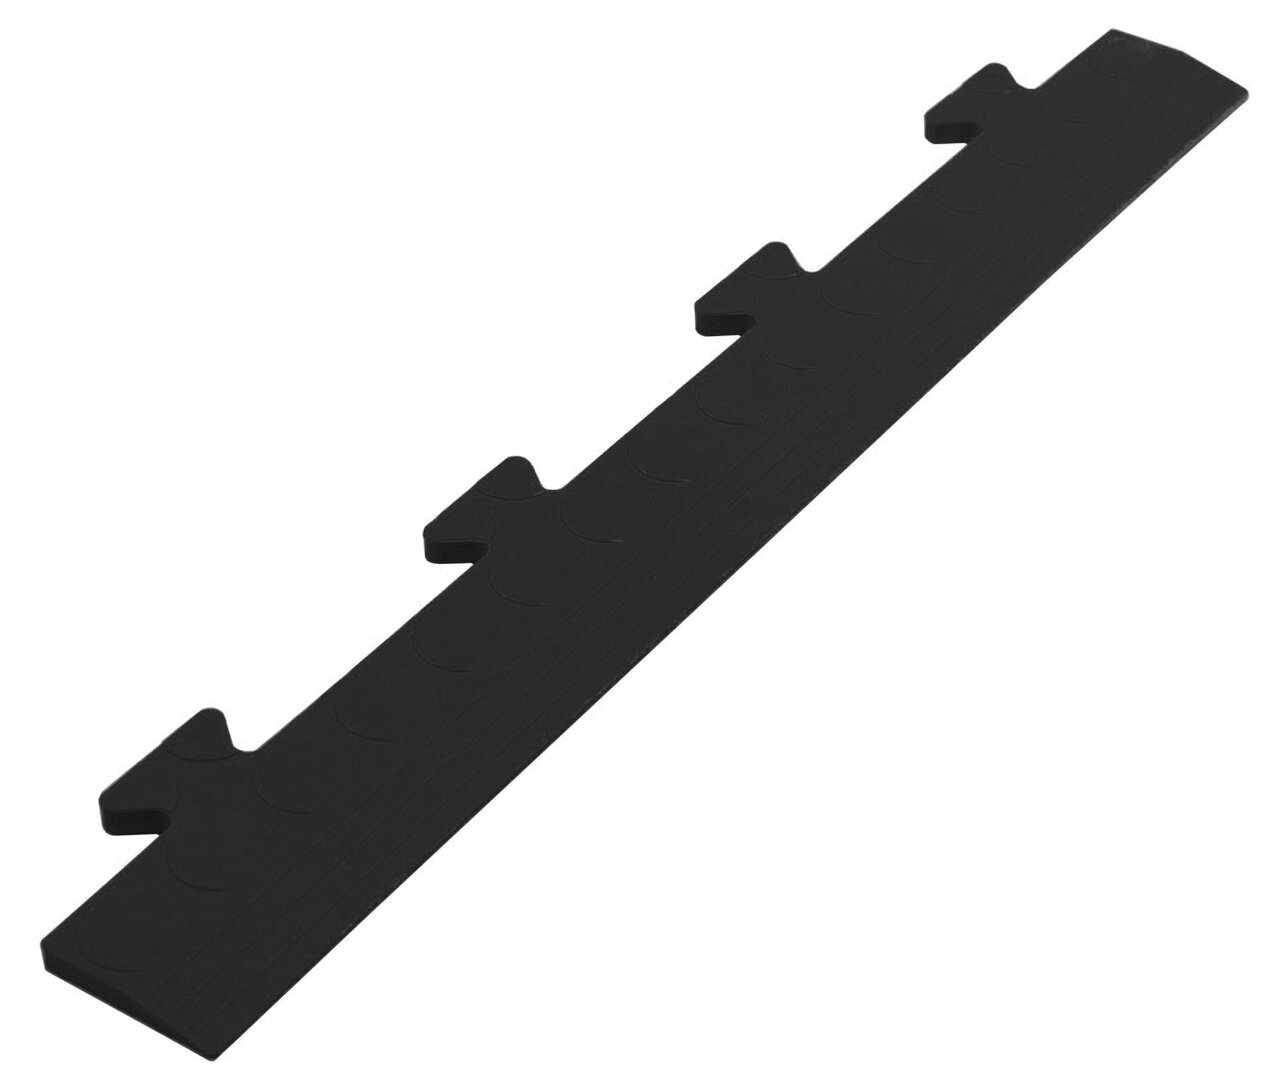 Černý PVC vinylový nájezd "samec" pro dlaždice Tenax (bubbles) - délka 48 cm, šířka 7 cm, výška 0,8 cm